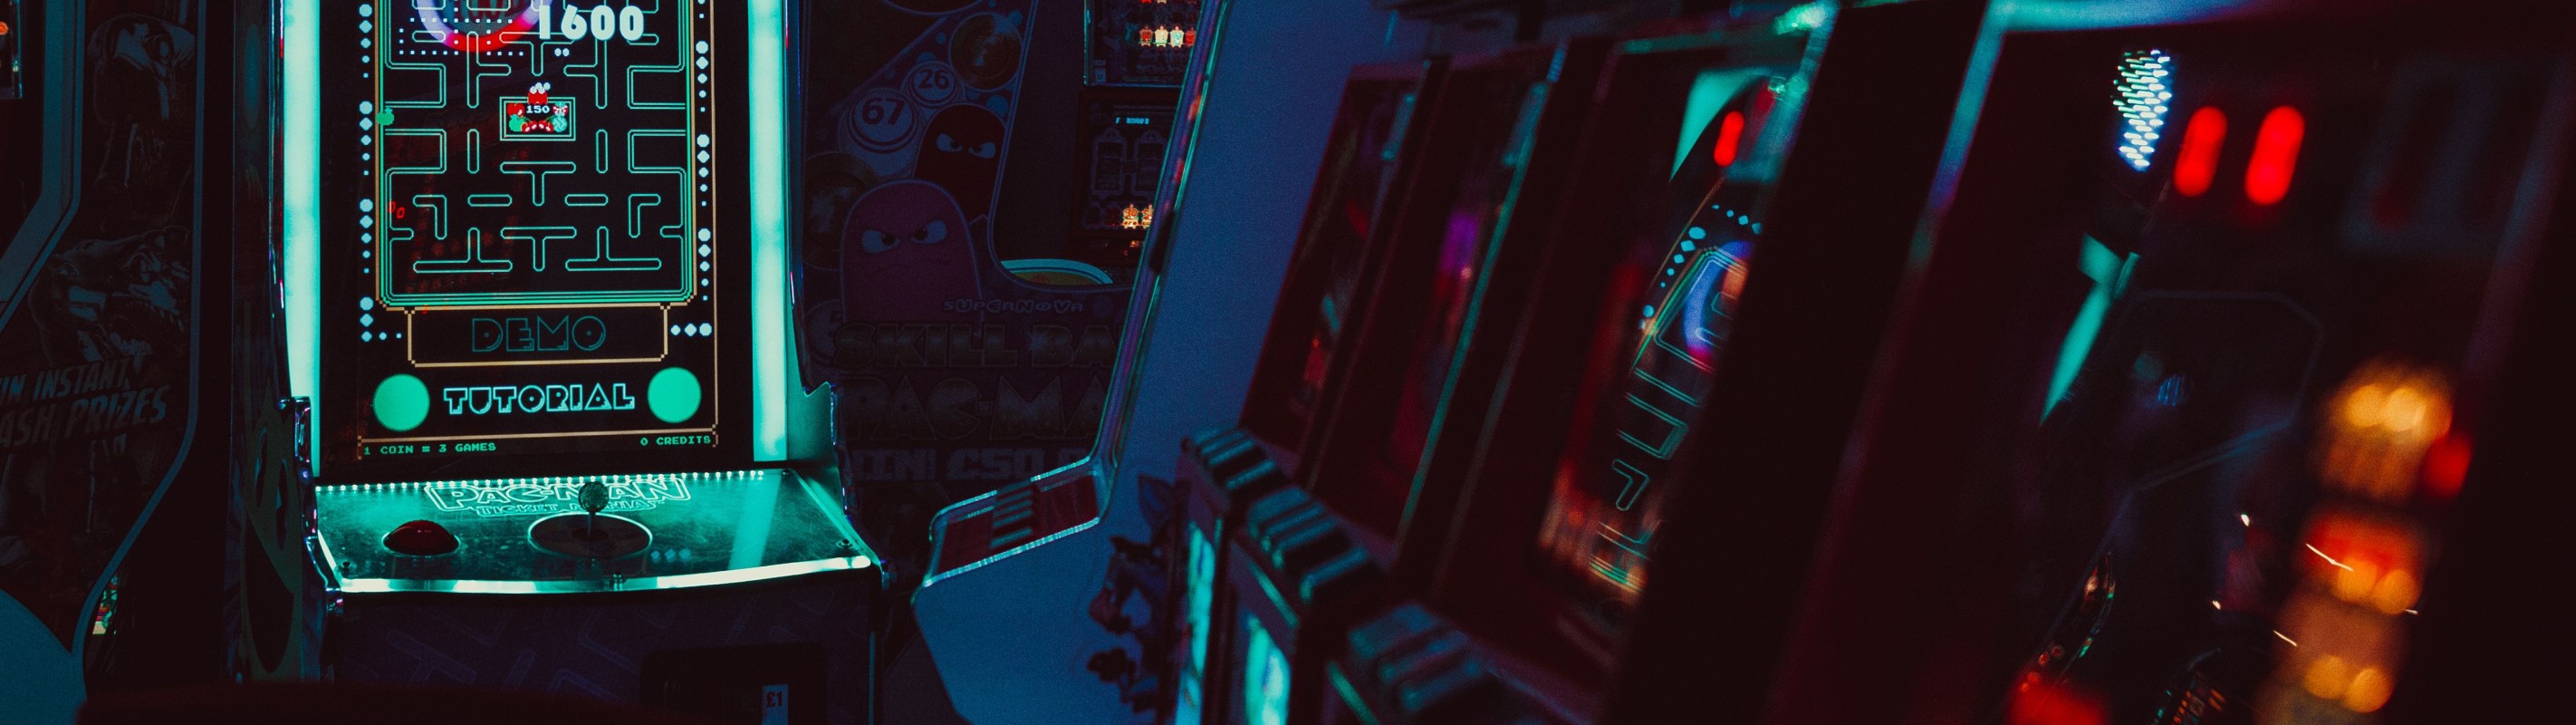 General 2844x800 arcade  neon video games Pac-Man  arcade cabinet indoors retro games 1980s